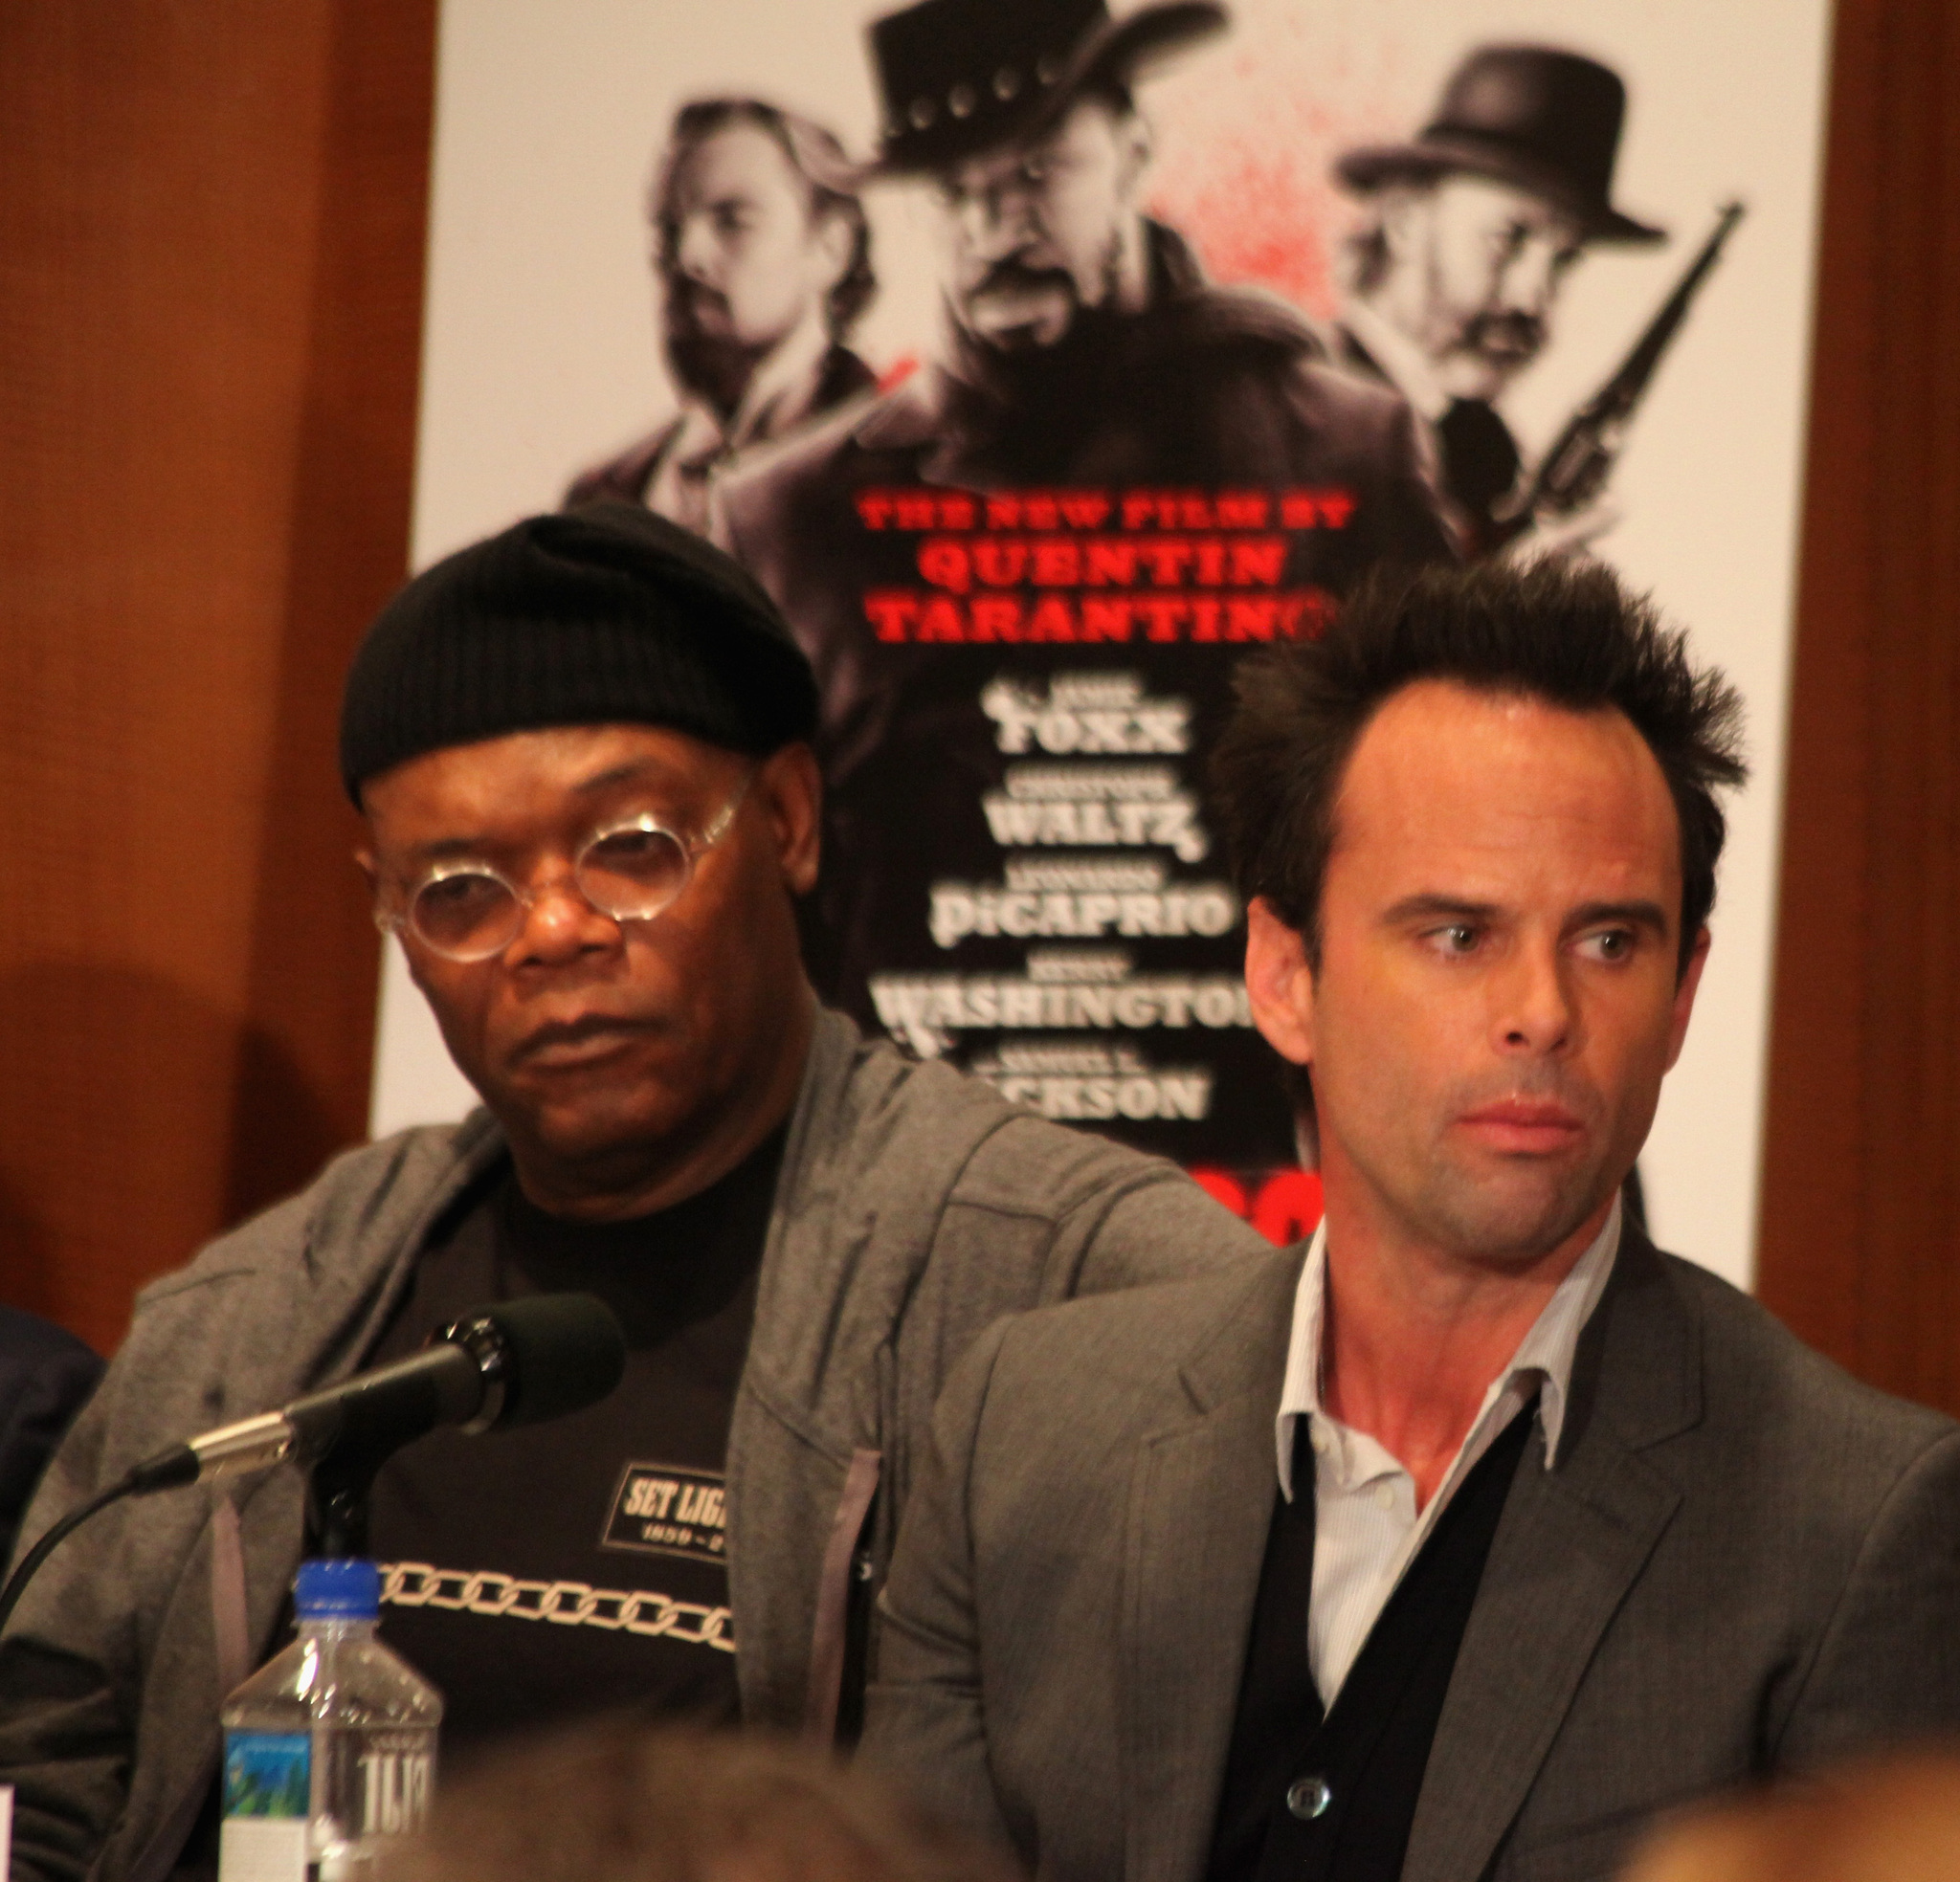 Samuel L. Jackson and Walton Goggins at event of Istrukes Dzango (2012)